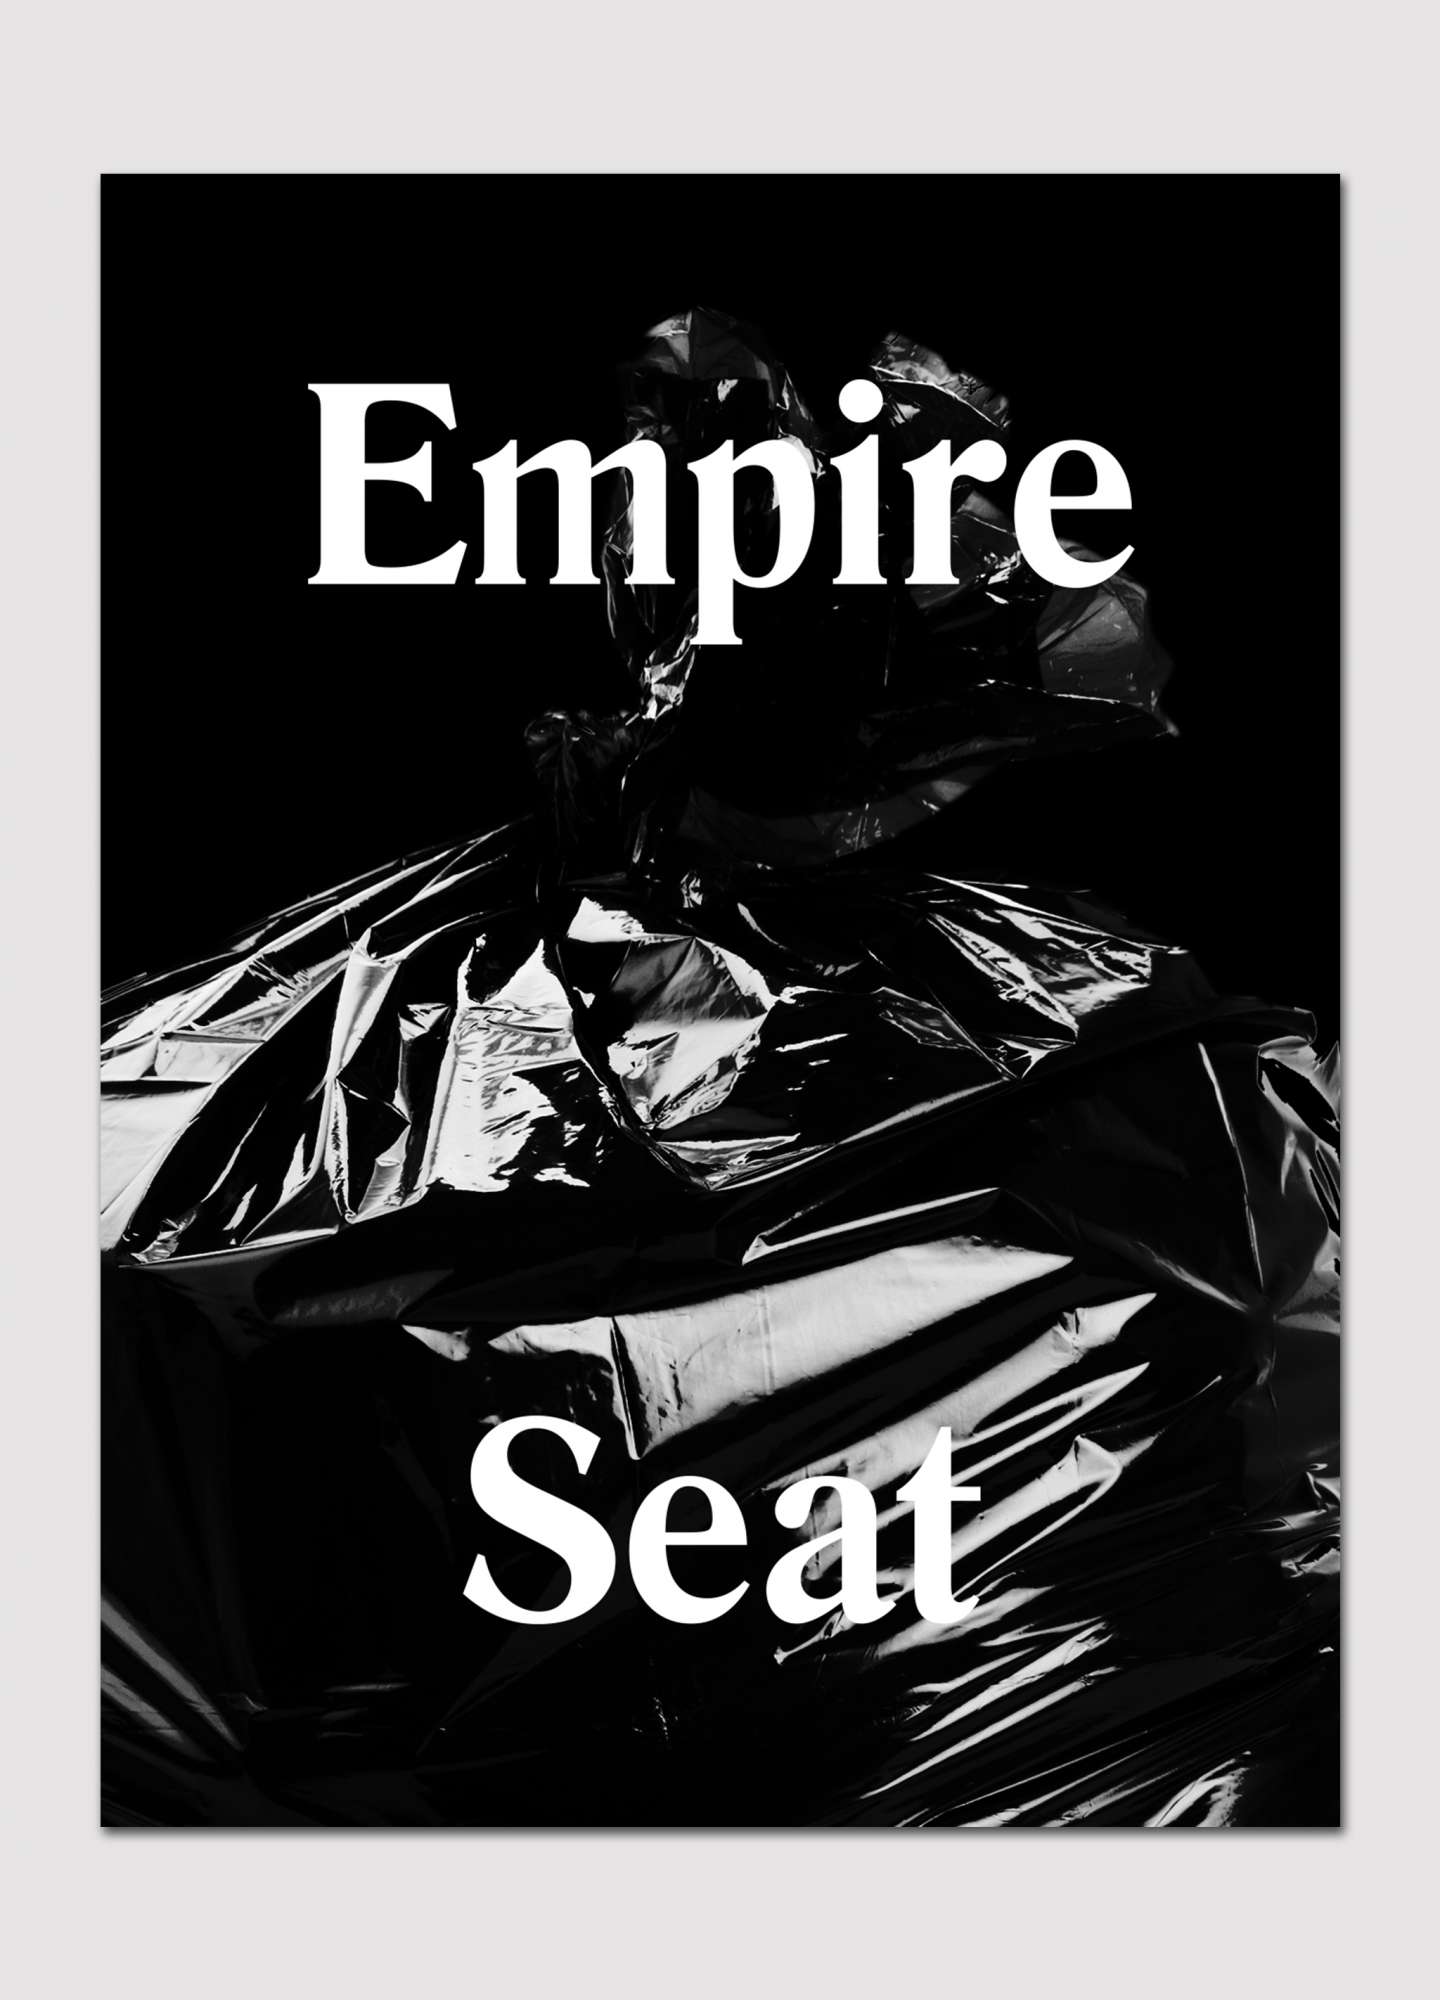 The Empire Seat